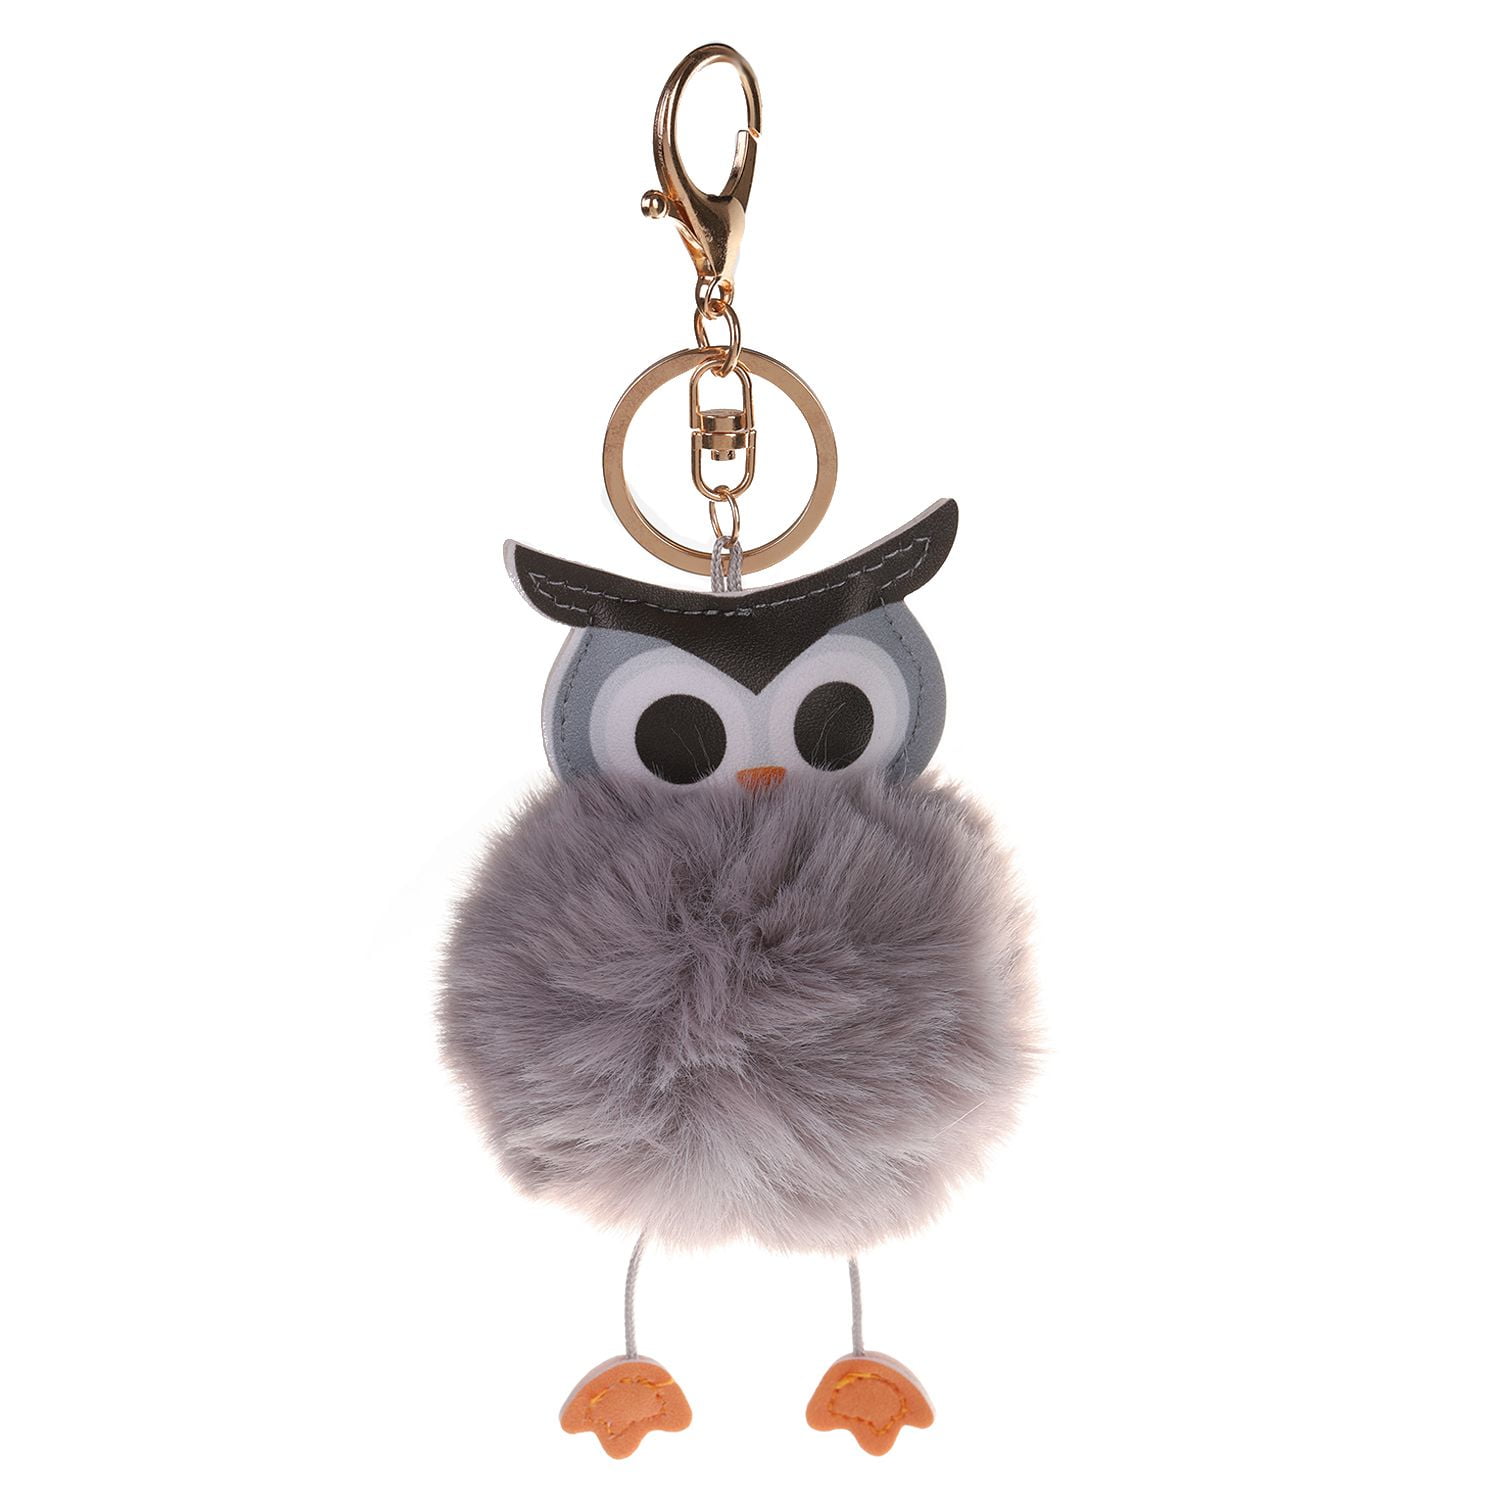 Cute Owl Pom Pom Ball Plush Car Key Chain Keyring Handbag Pendant Decor Gifts 